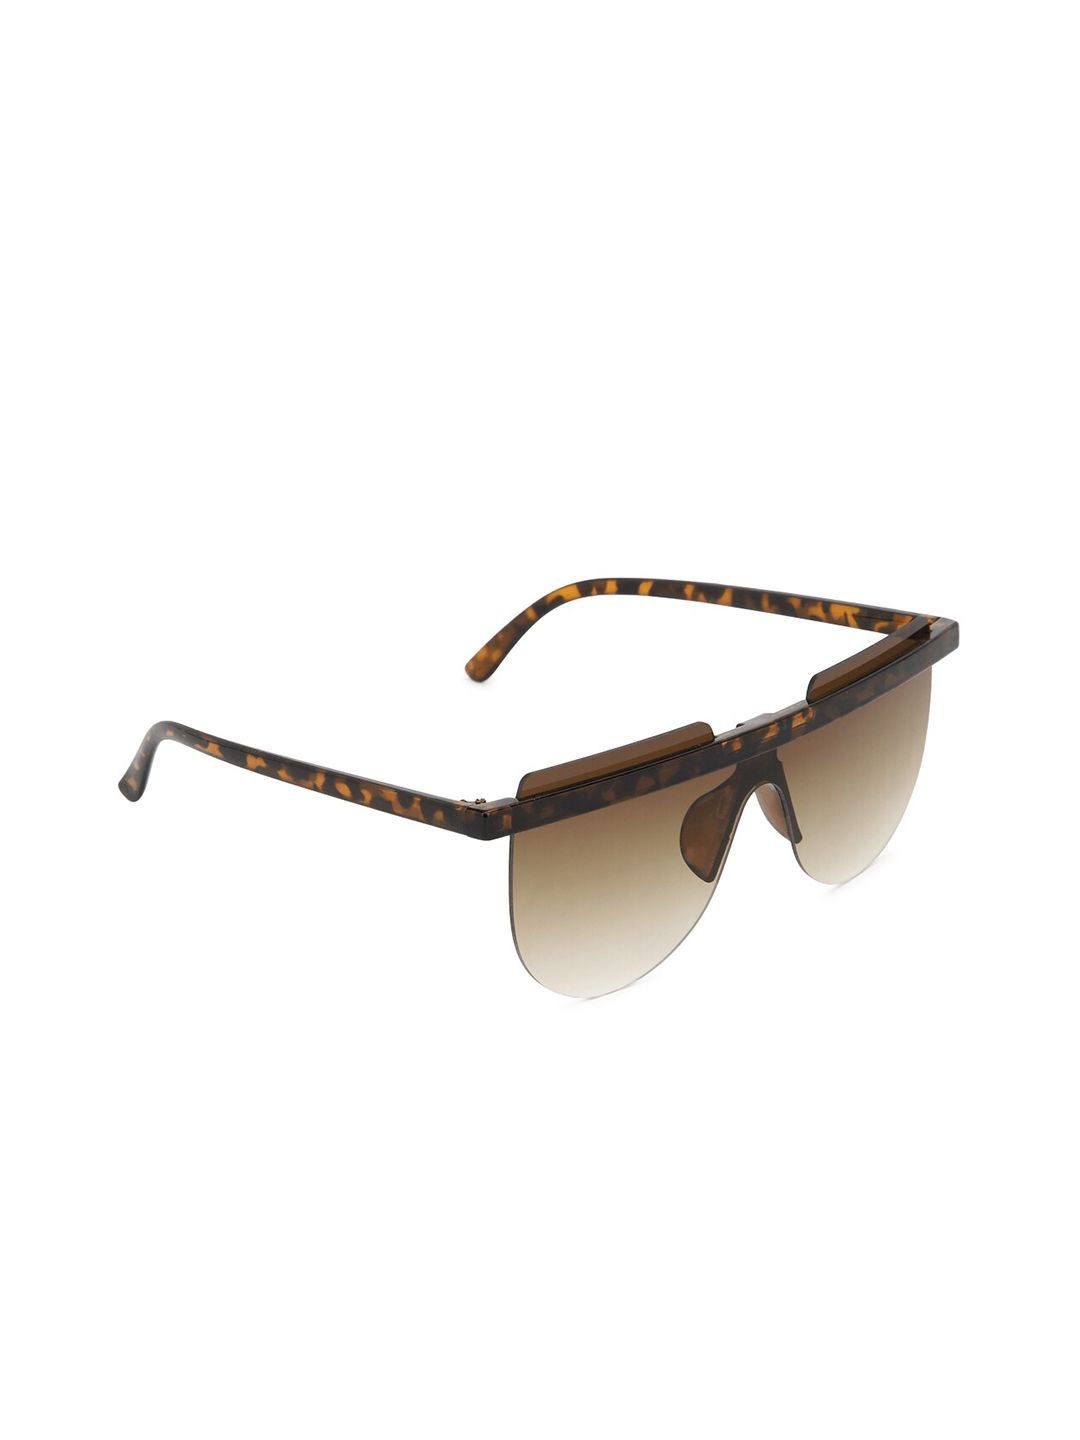 FOREVER 21 Women Brown Lens & Brown Aviator Sunglasses 0059492501 Price in India